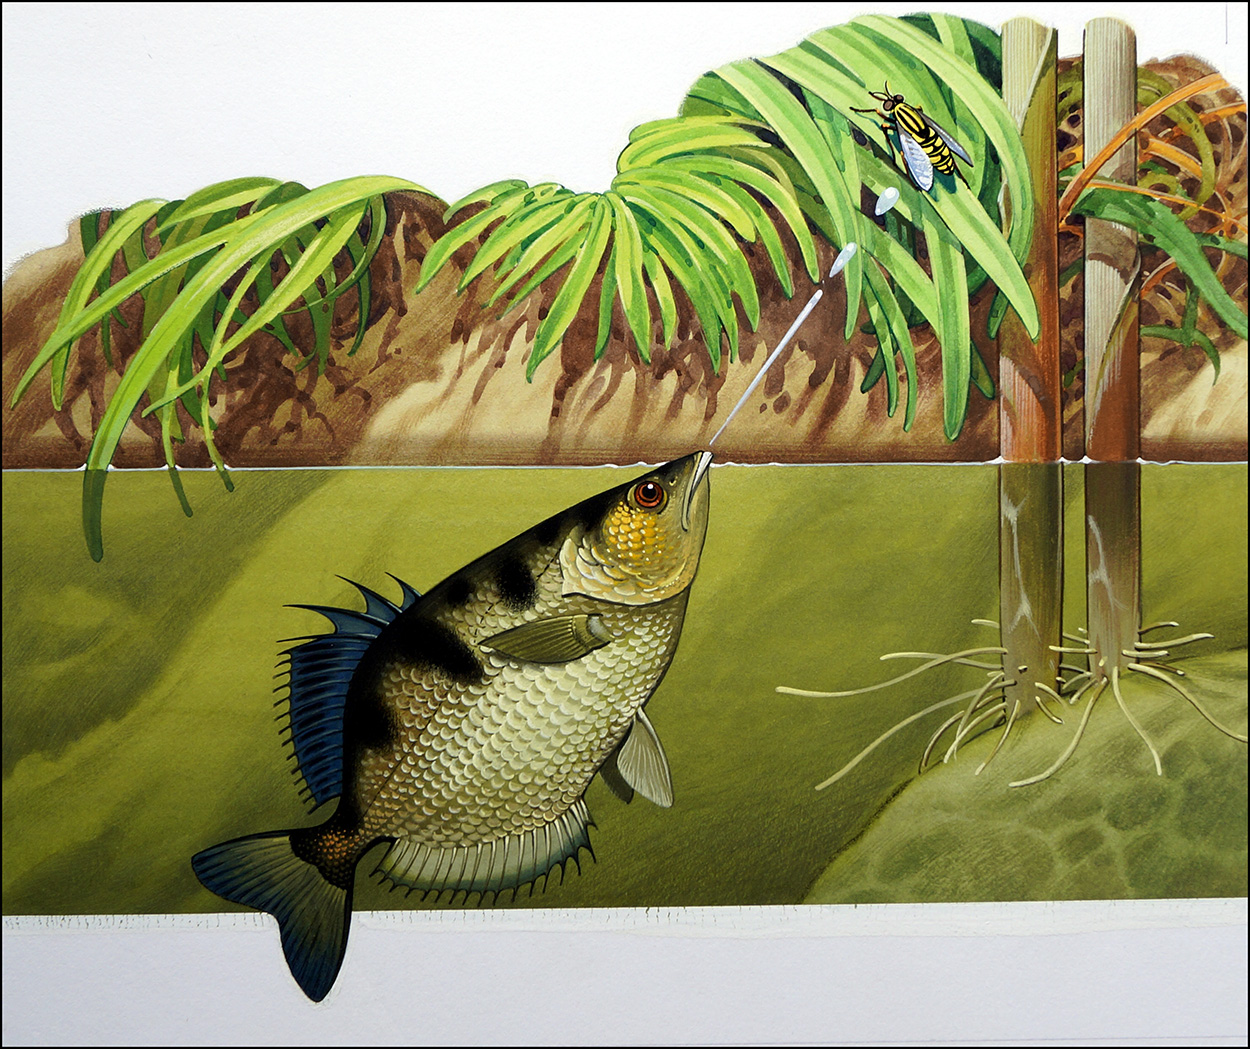 Archer Fish (Original) art by Bernard Long Art at The Illustration Art Gallery